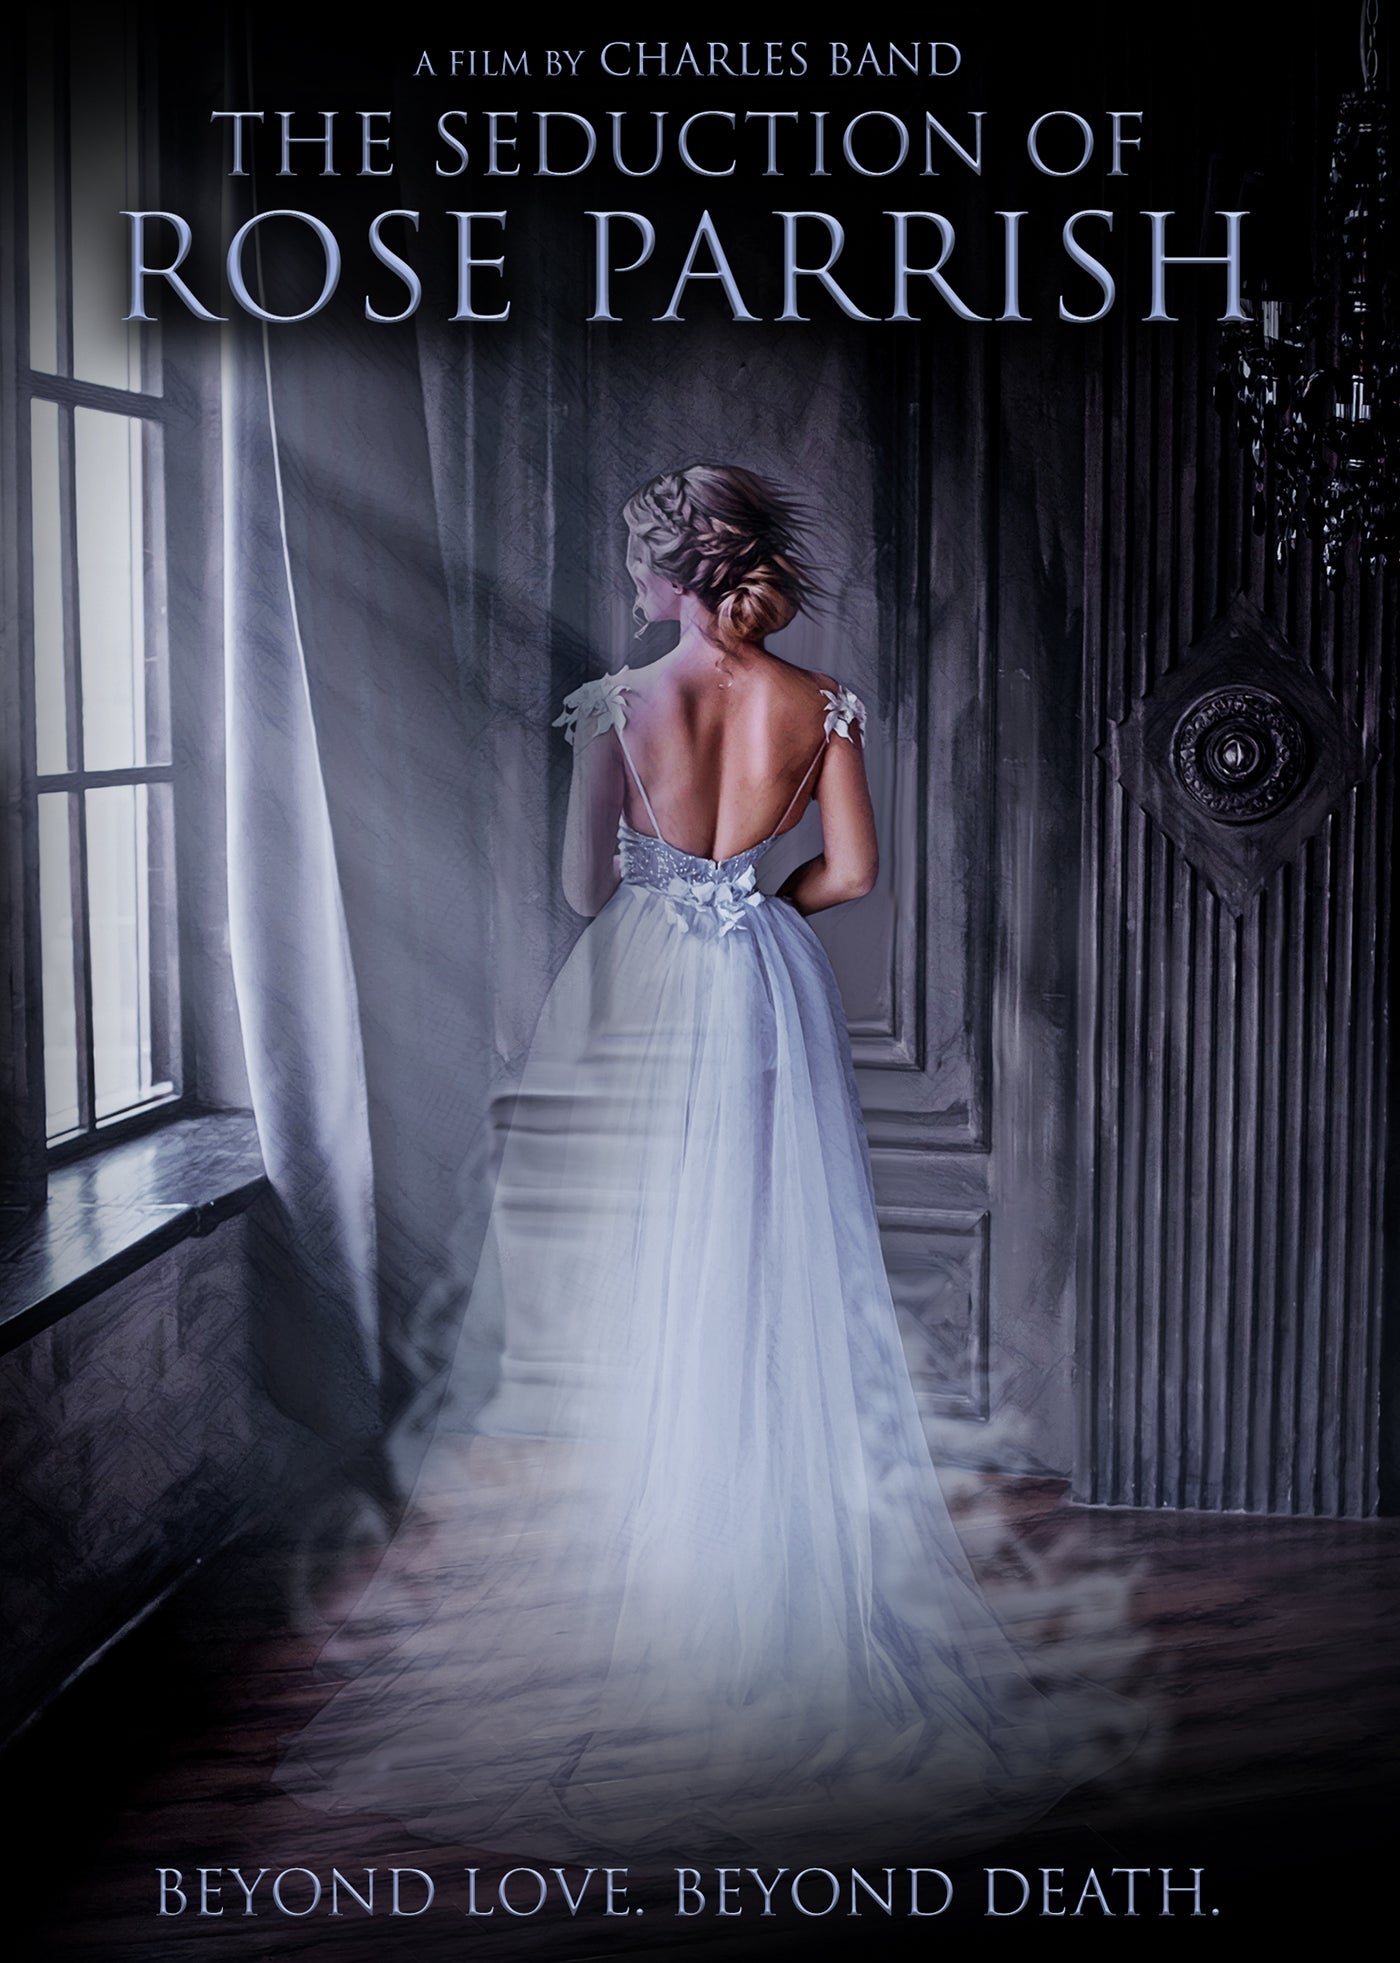 THE SEDUCTION OF ROSE PARRISH DVD